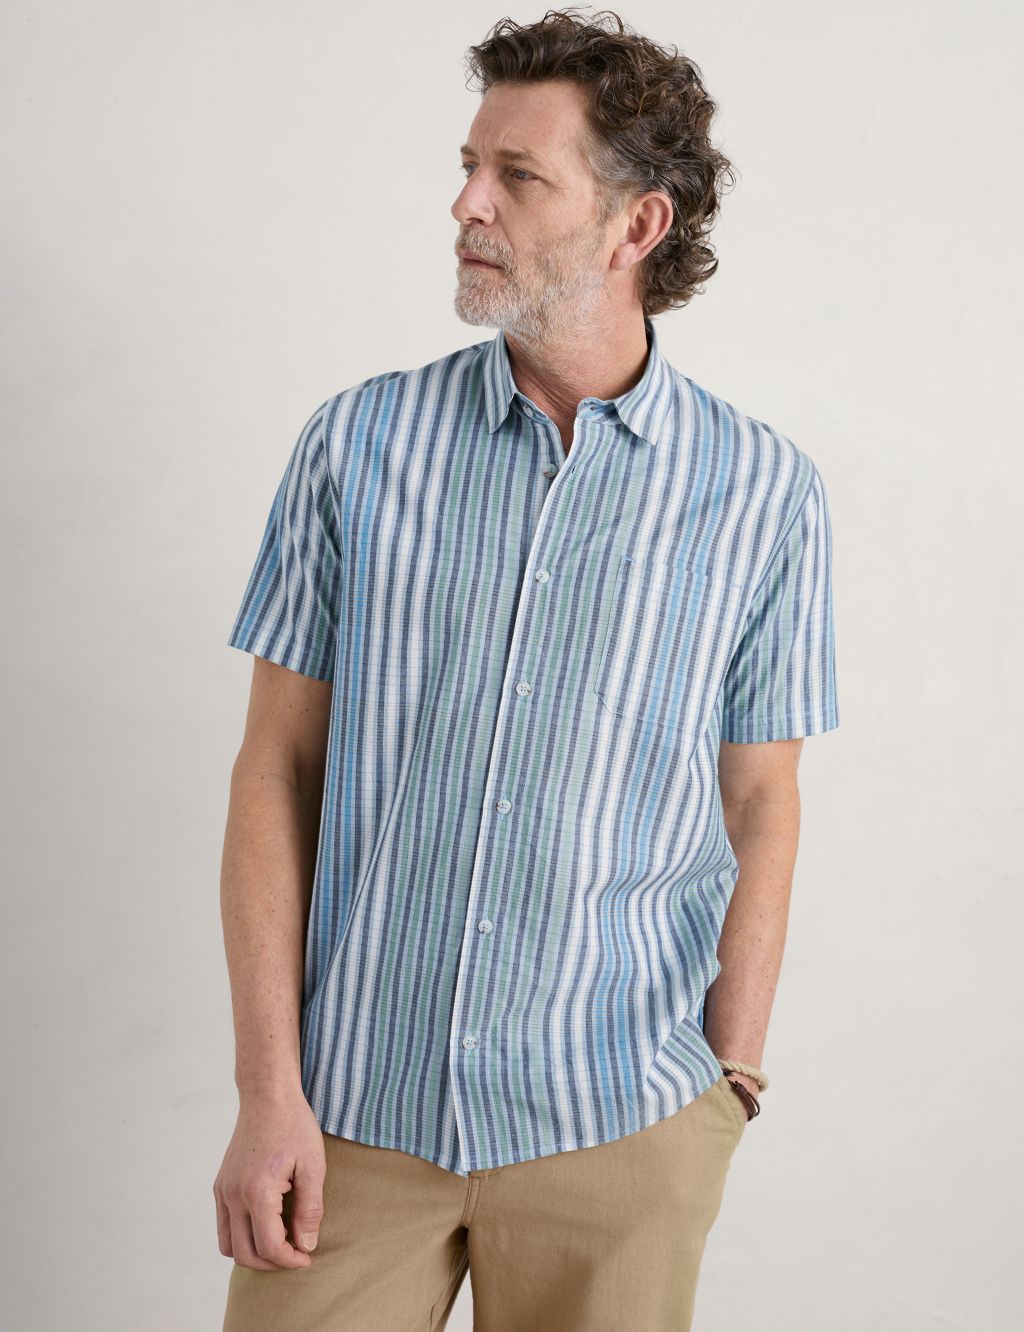 Organic Cotton Striped Shirt image 2